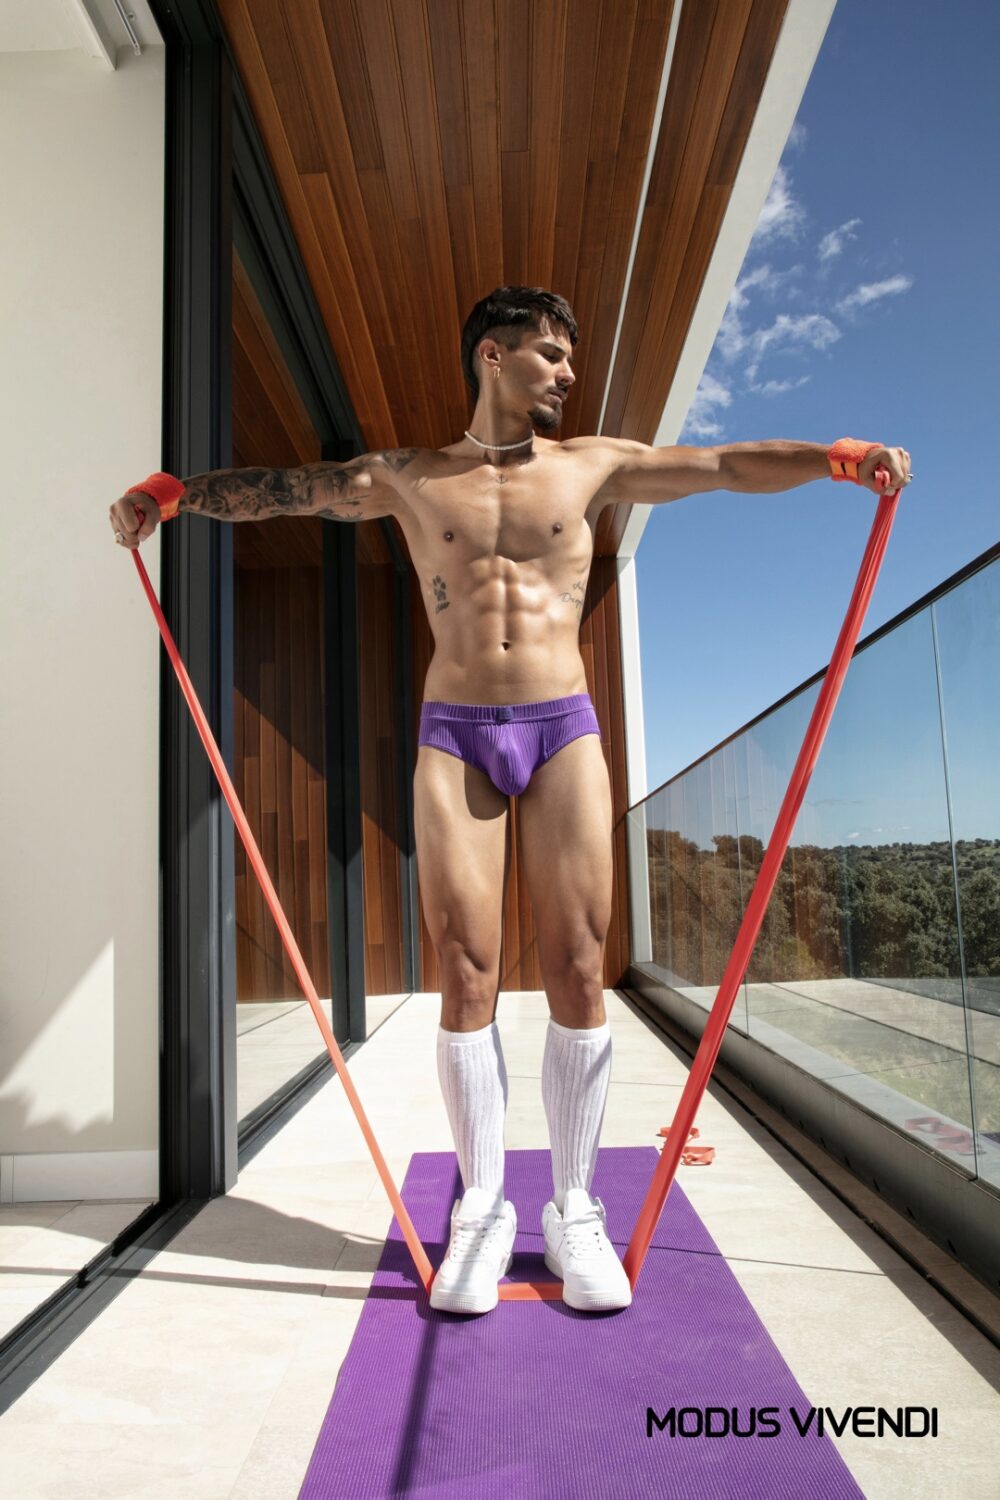 MODUS VIVENDI unveils the 1st Part of The Roommates Campaign – Underwear  News Briefs